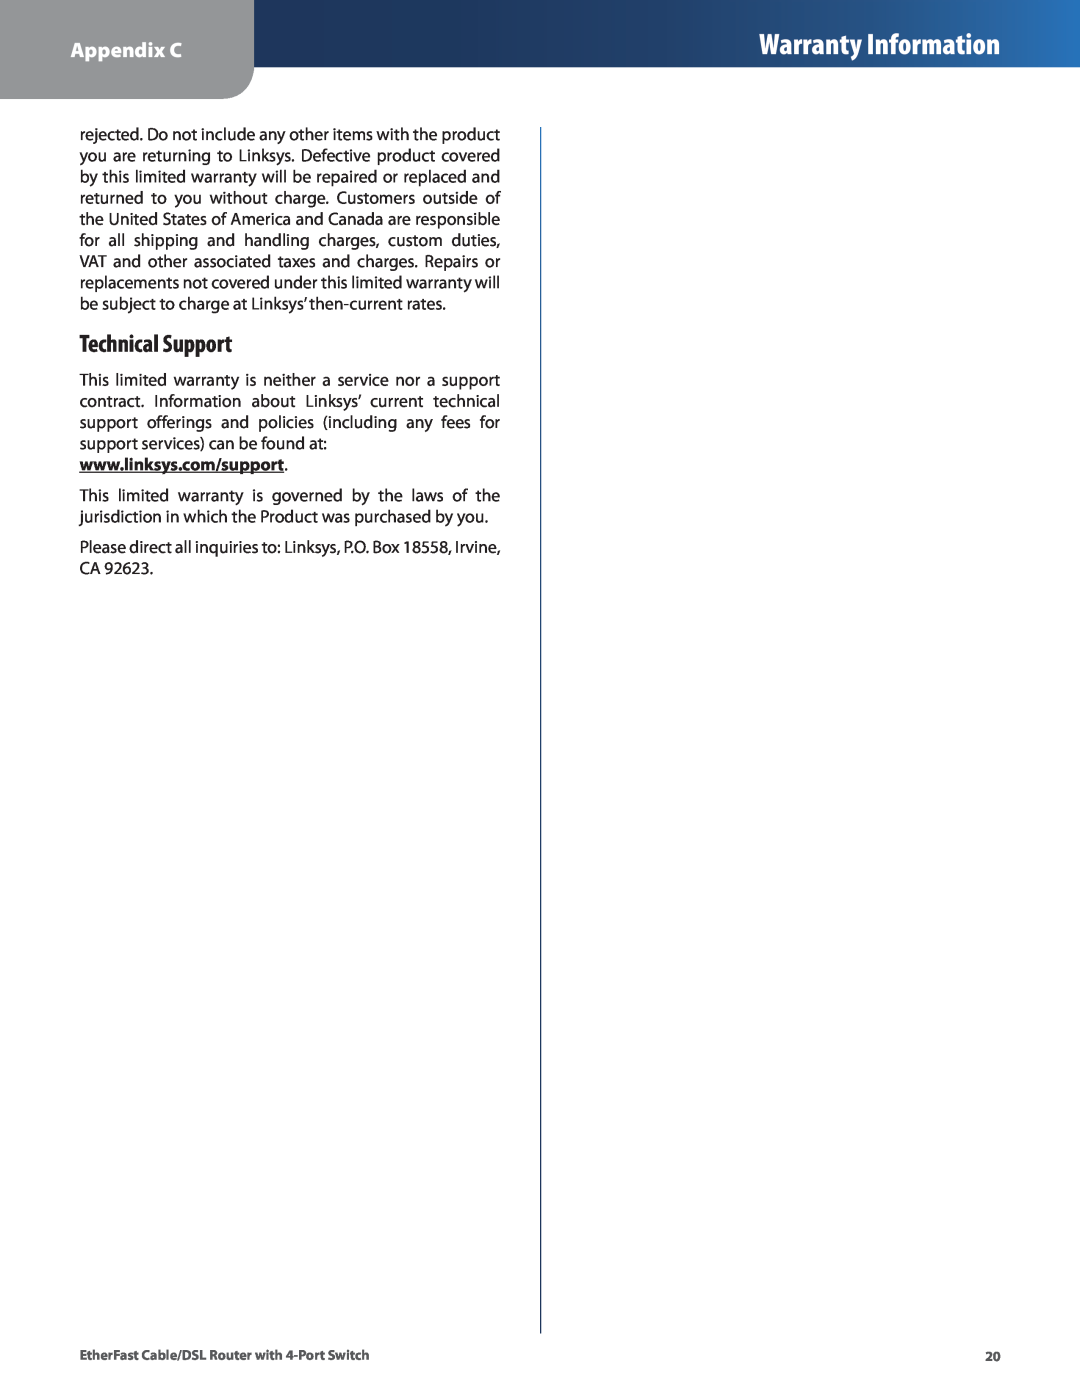 Honeywell HEMS II manual Technical Support, Warranty Information, Appendix C 